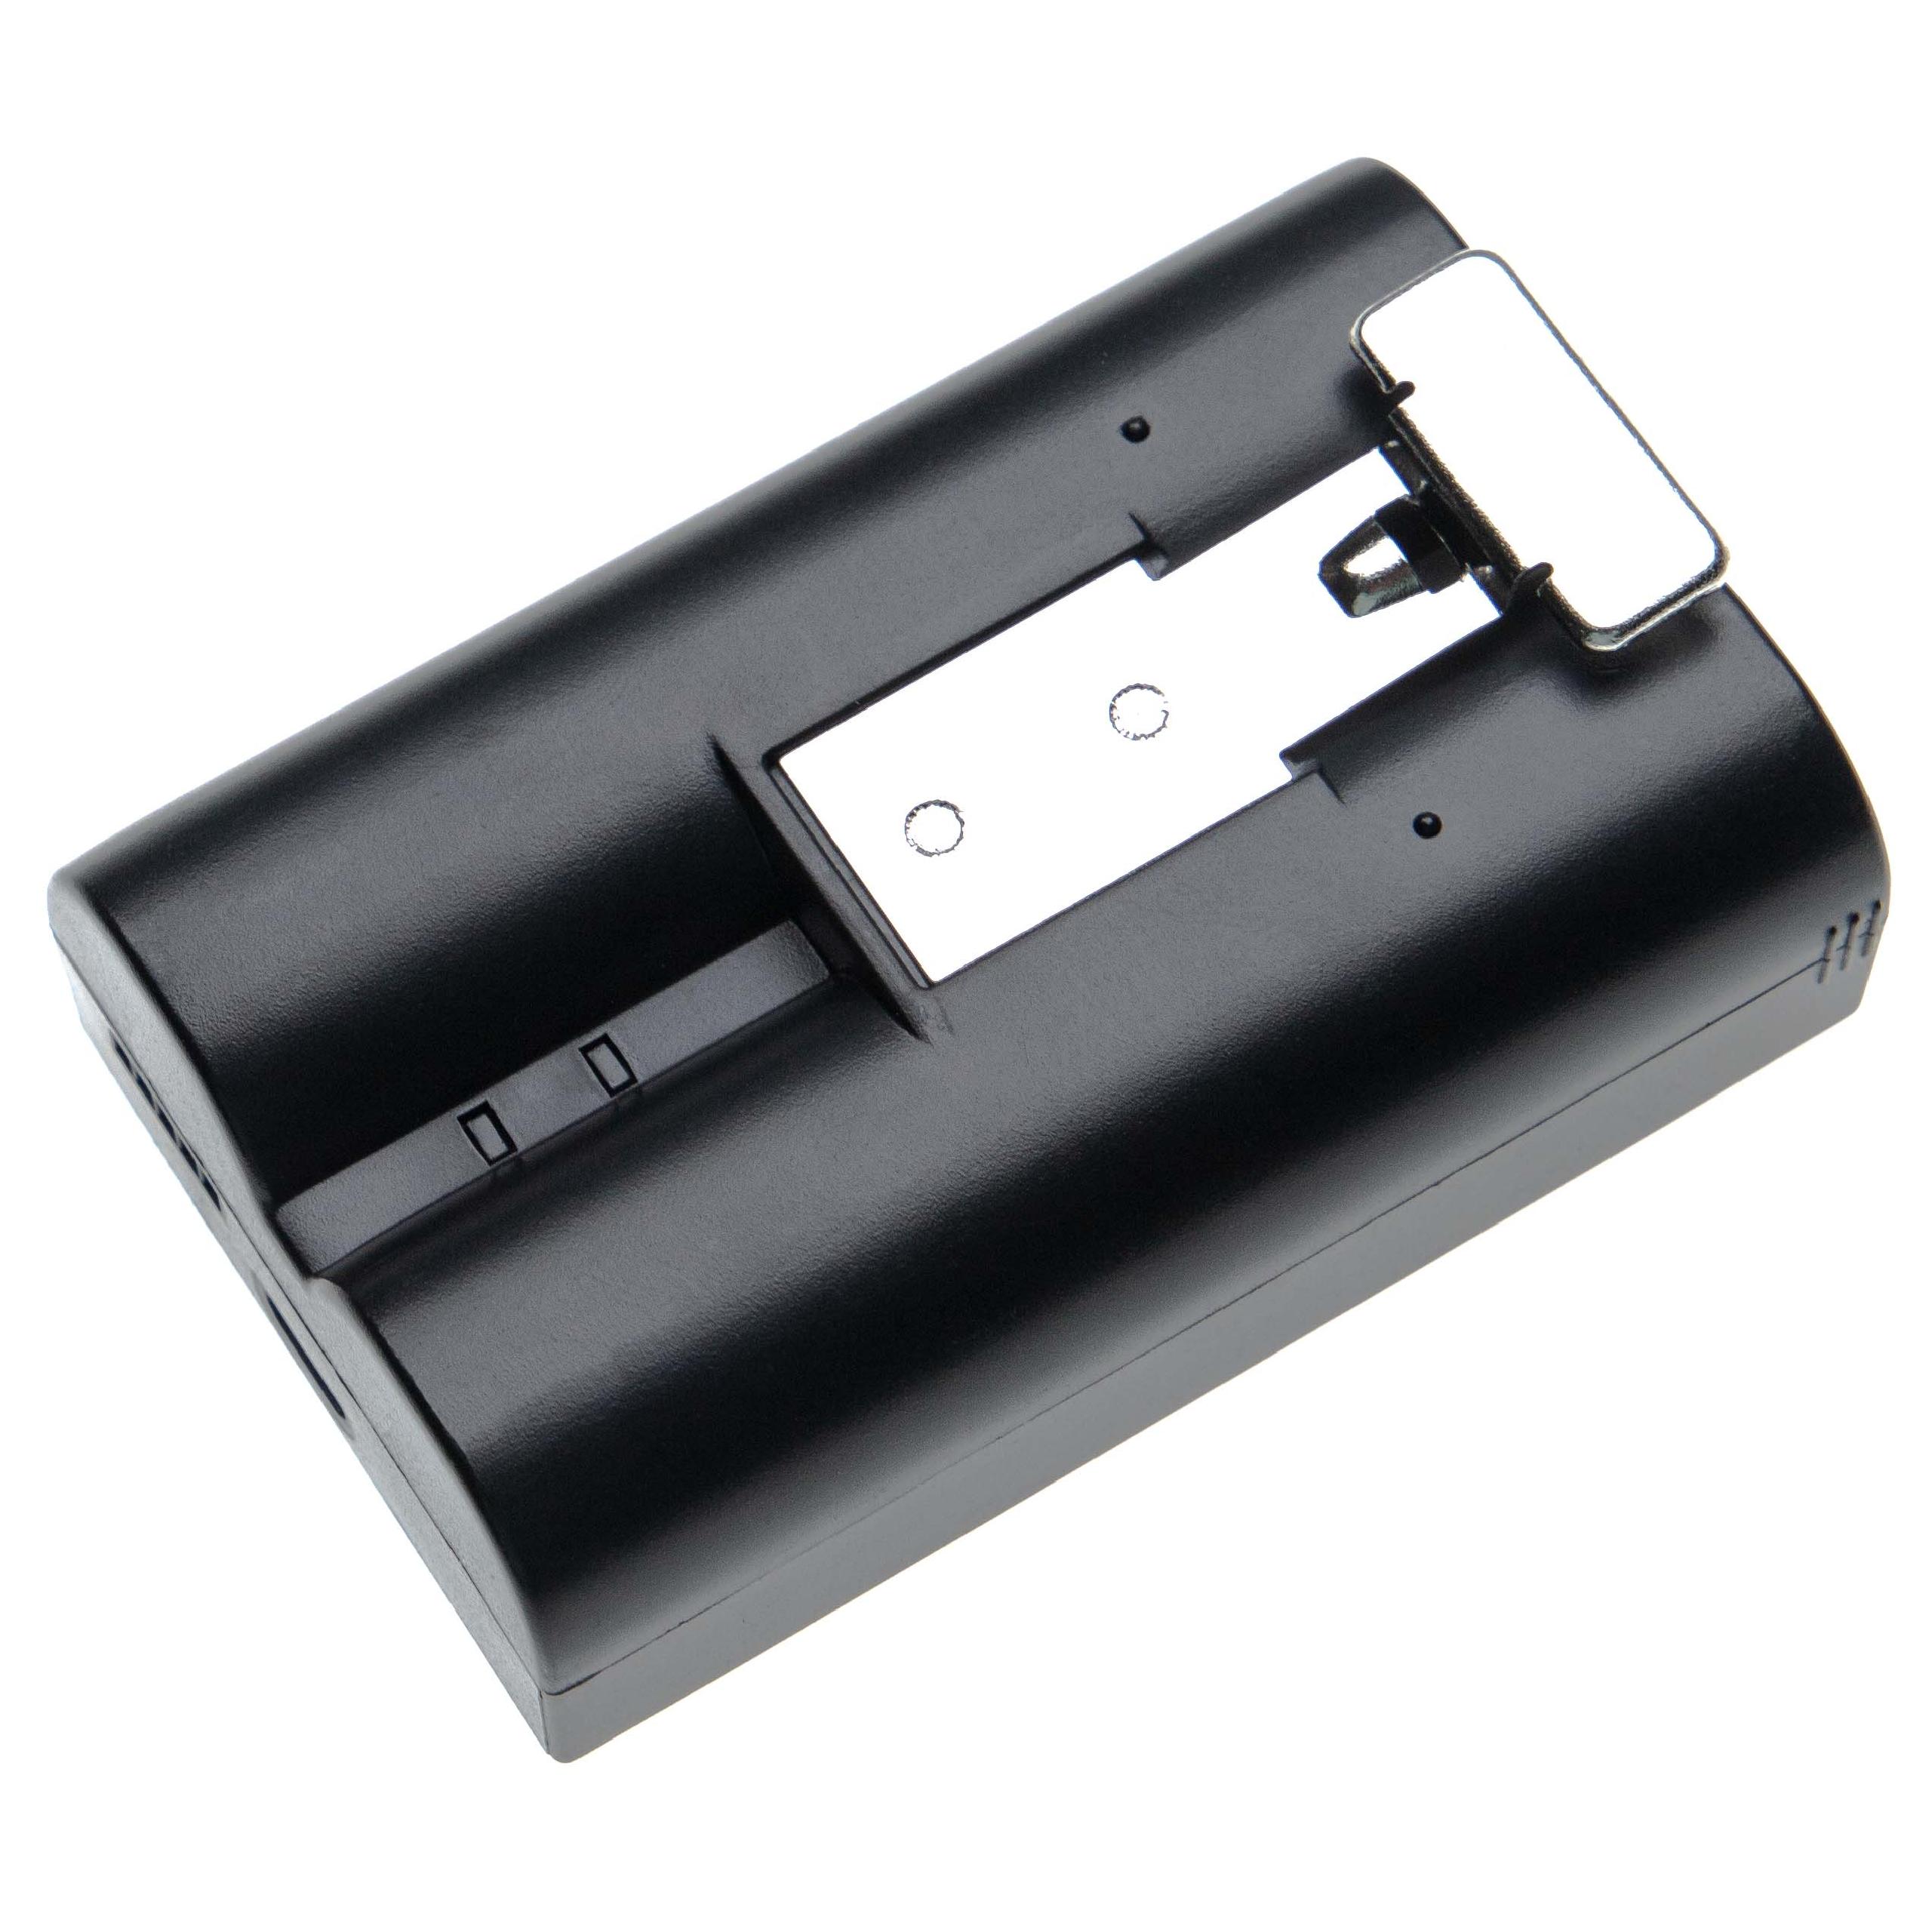 Intercom Doorbell Battery Replacement for Ring 8AB1S7-0EN0 - 5200mAh 3.7V Li-Ion